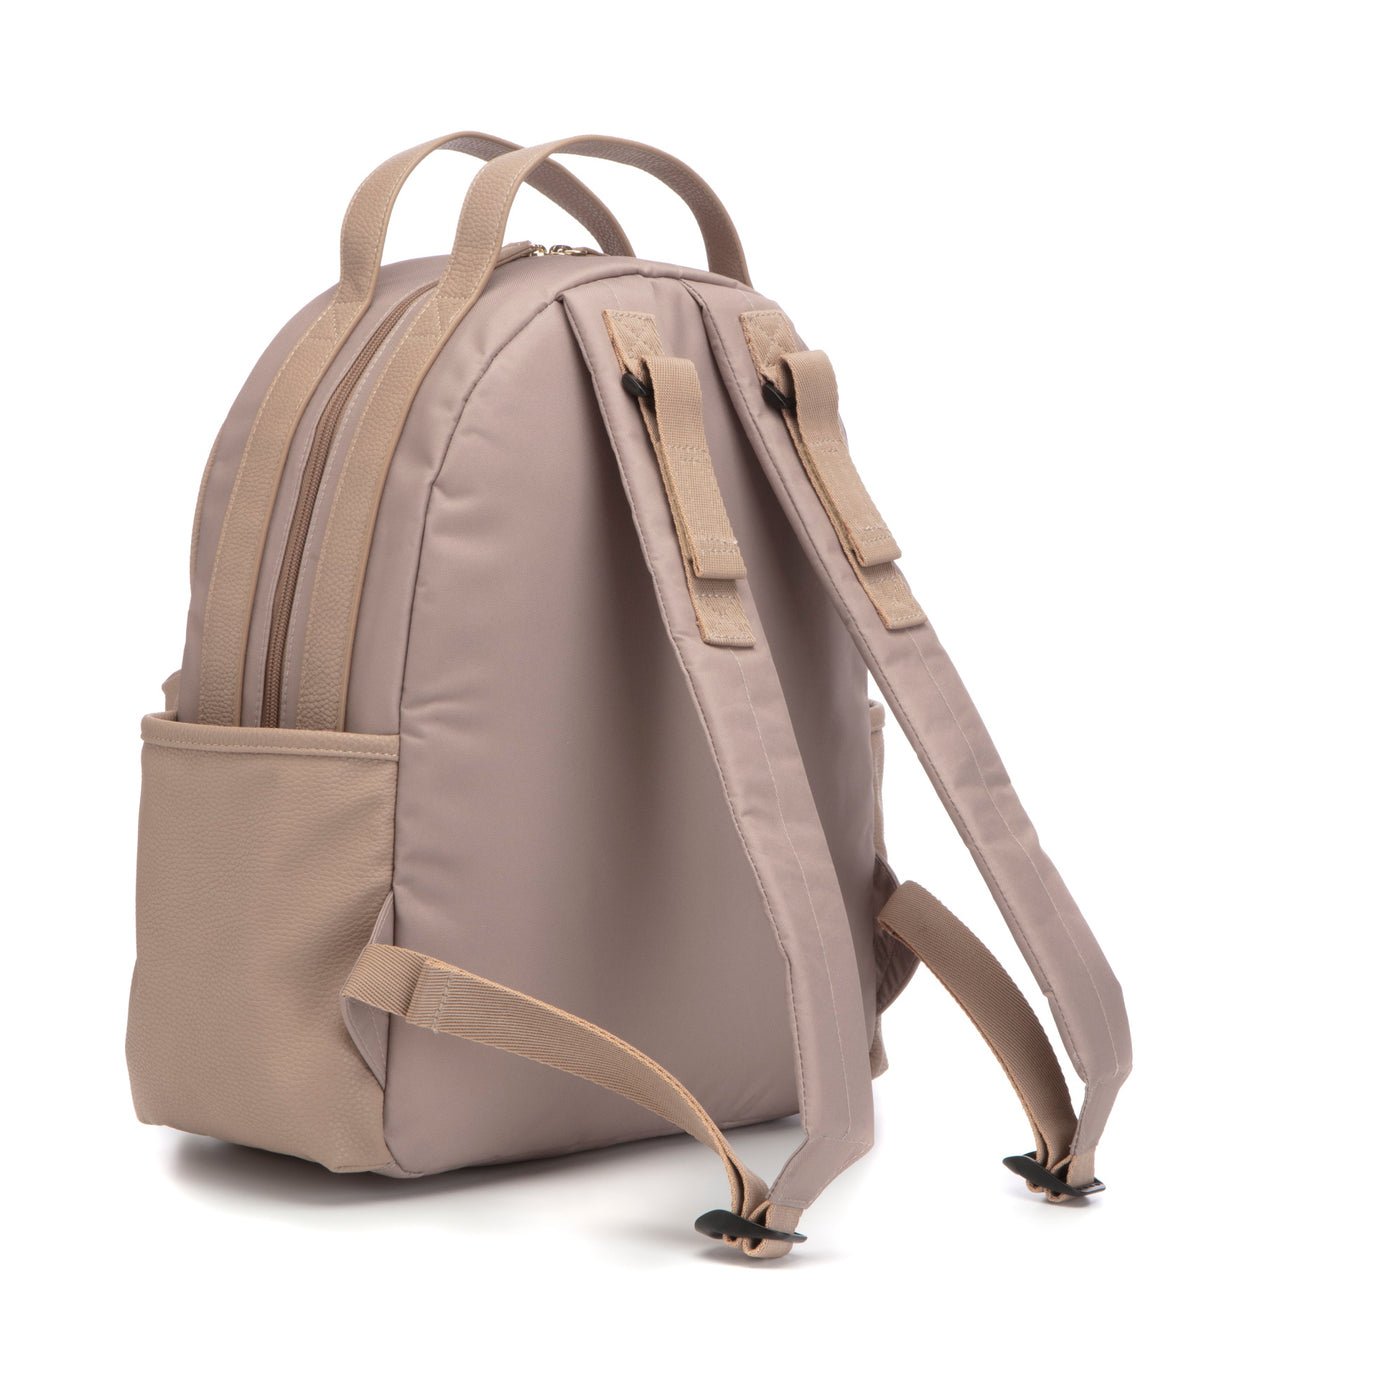 Lola Backpack Nappy Bag Vegan Leather - Blush